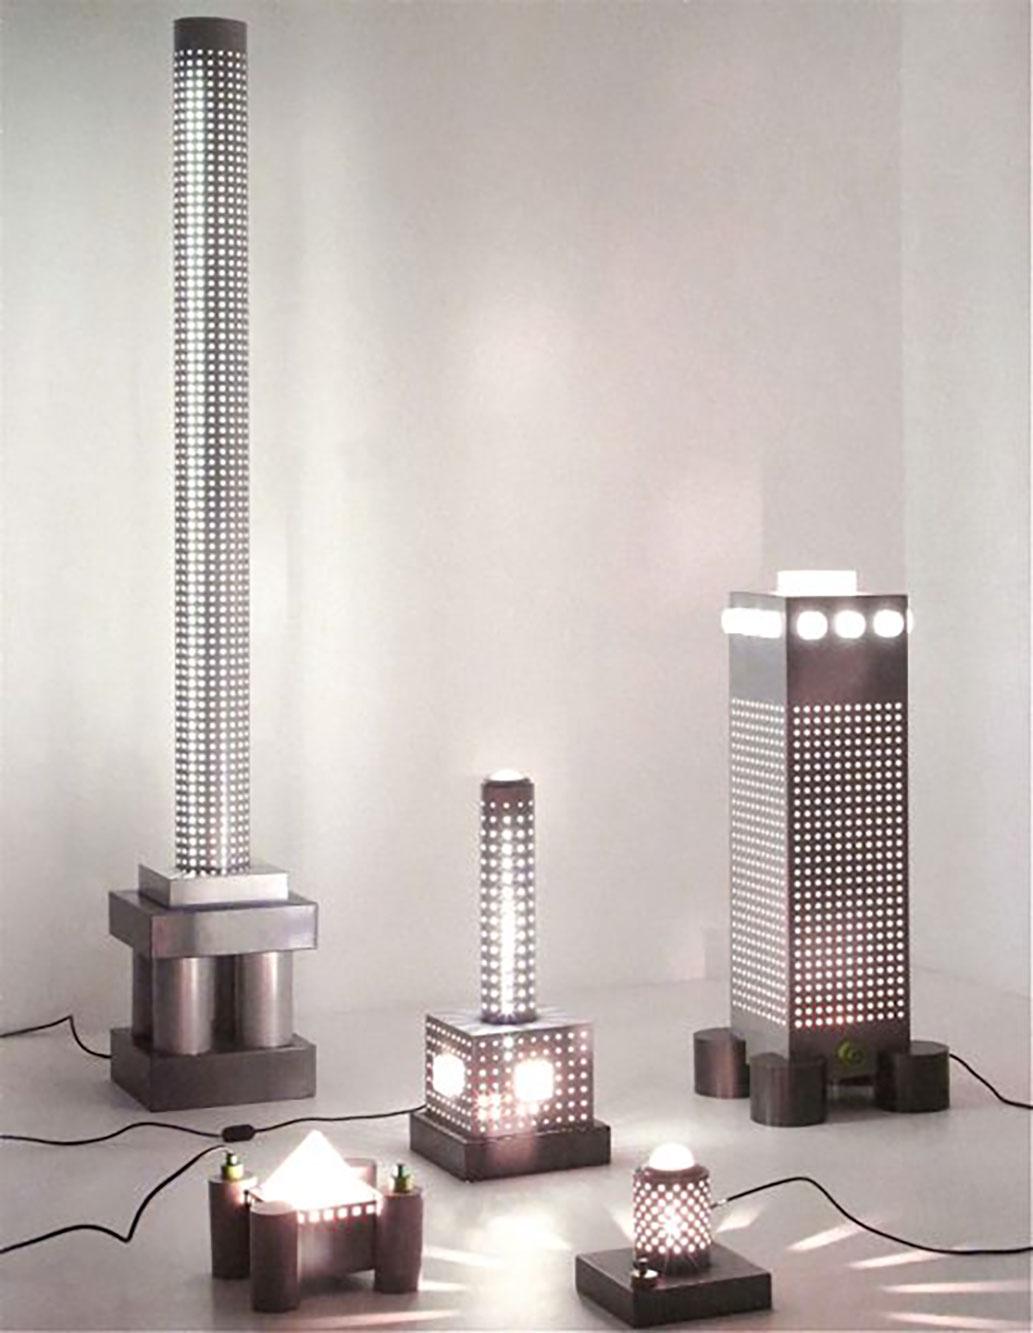 Fin du 20e siècle Matteo Thun & Andrea Lera Wwf Tower Bieffeplast, lampe de bureau / lampadaire en vente